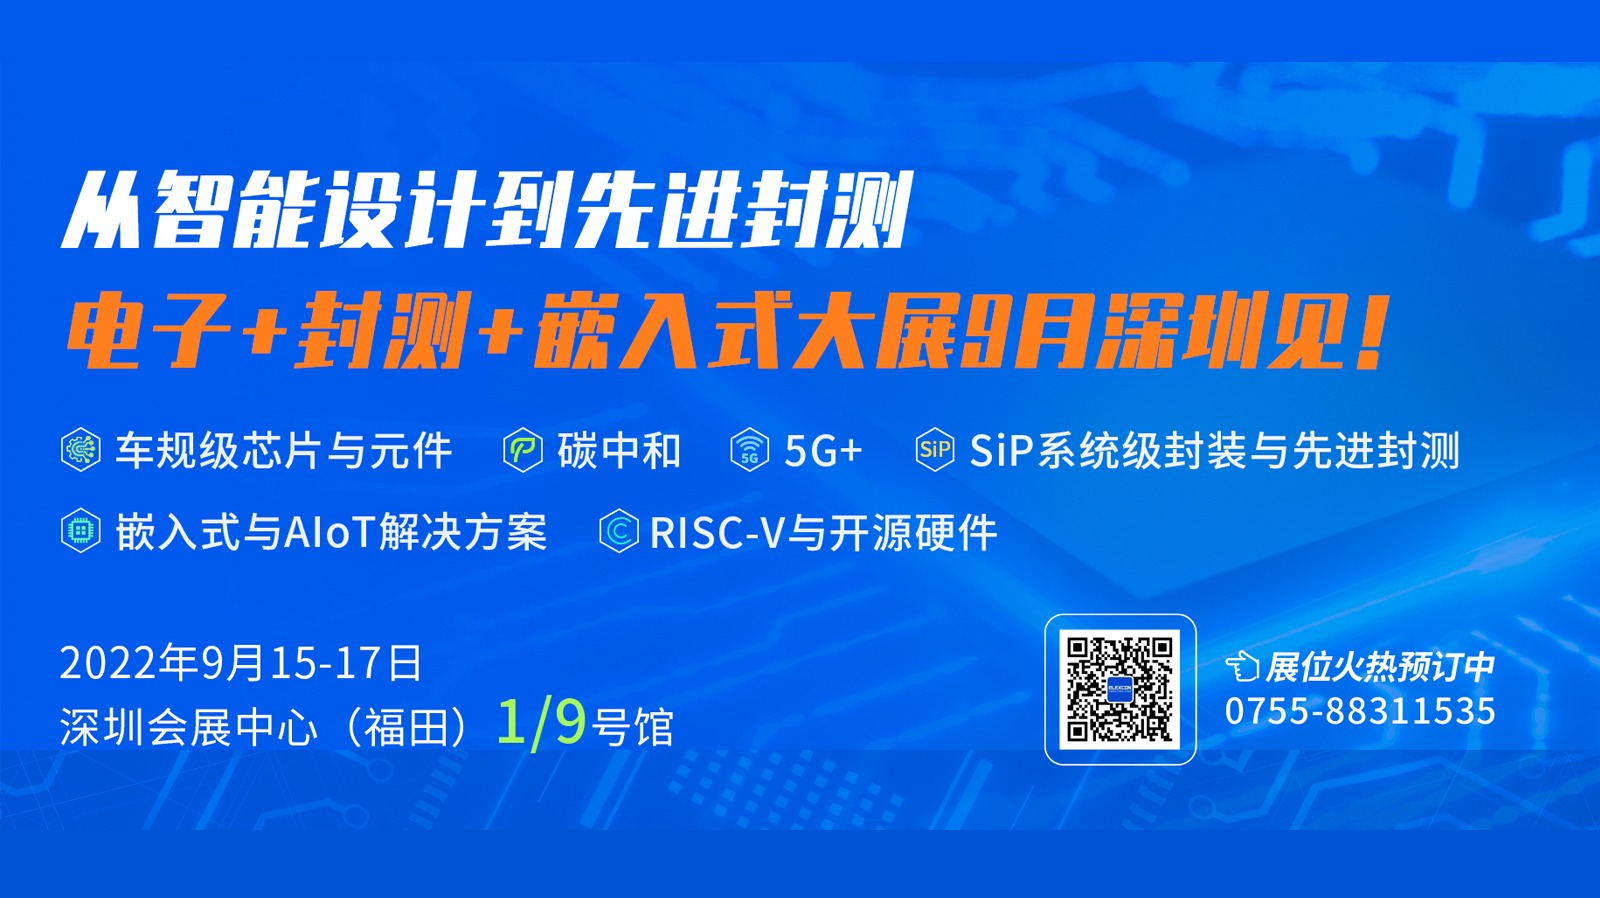 ELEXCON深圳国际电子展暨嵌入式系统展